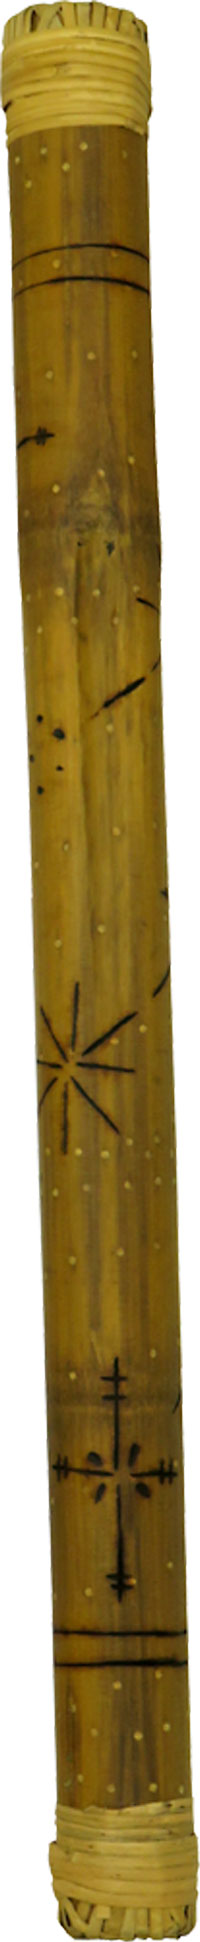 Atlas AP-L710 Bamboo Rainstick, 60cm Long Pokerwork designs. Approx 60cm long and 5cm diameter